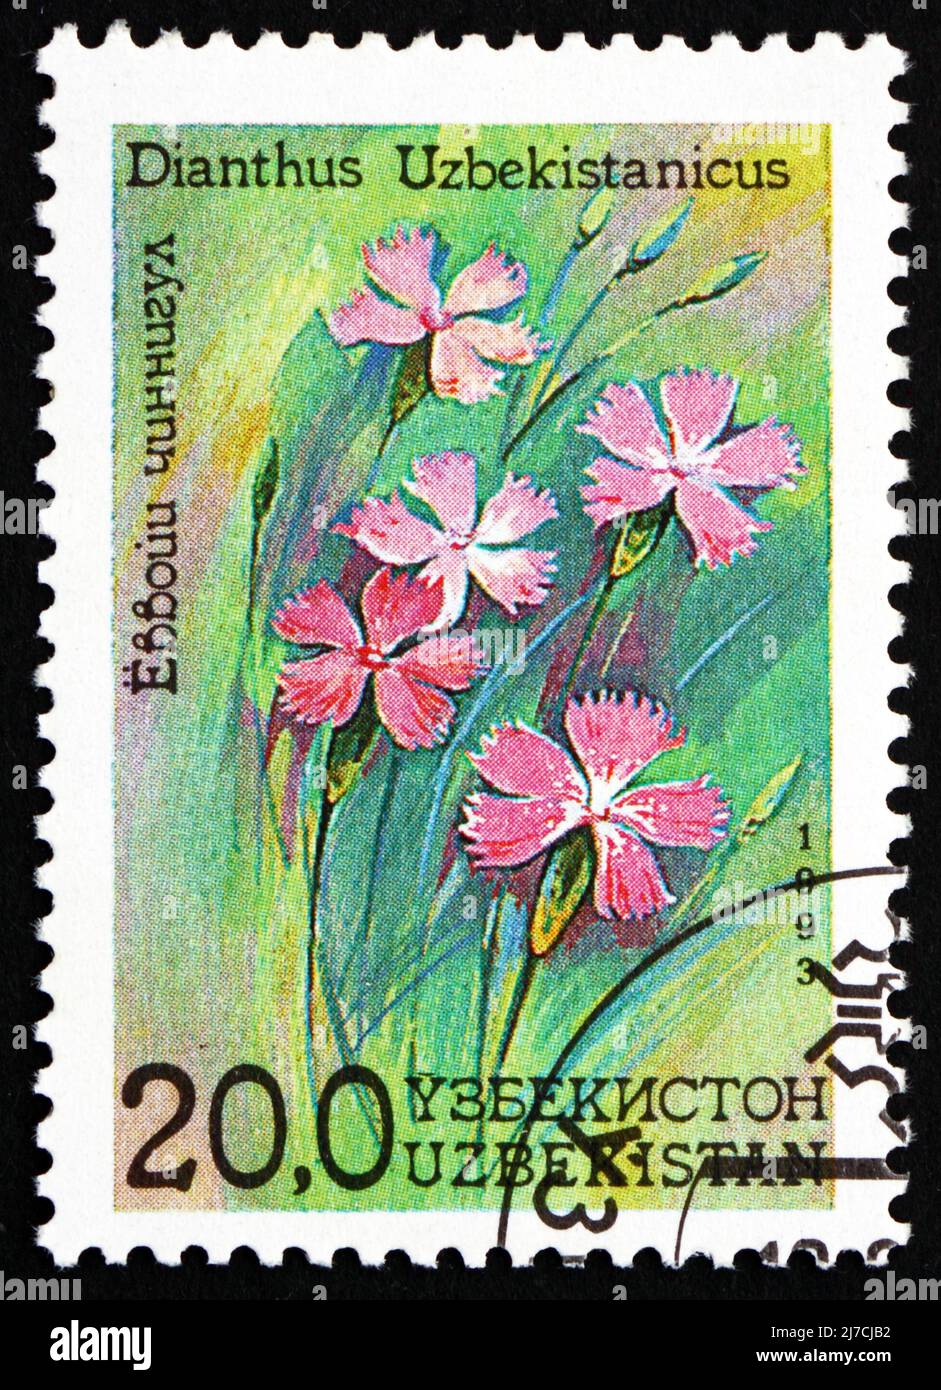 UZBEKISTAN - CIRCA 1993: a stamp printed in Uzbekistan shows Dianthus, Dianthus Uzbekistanicus, Flower, circa 1993 Stock Photo